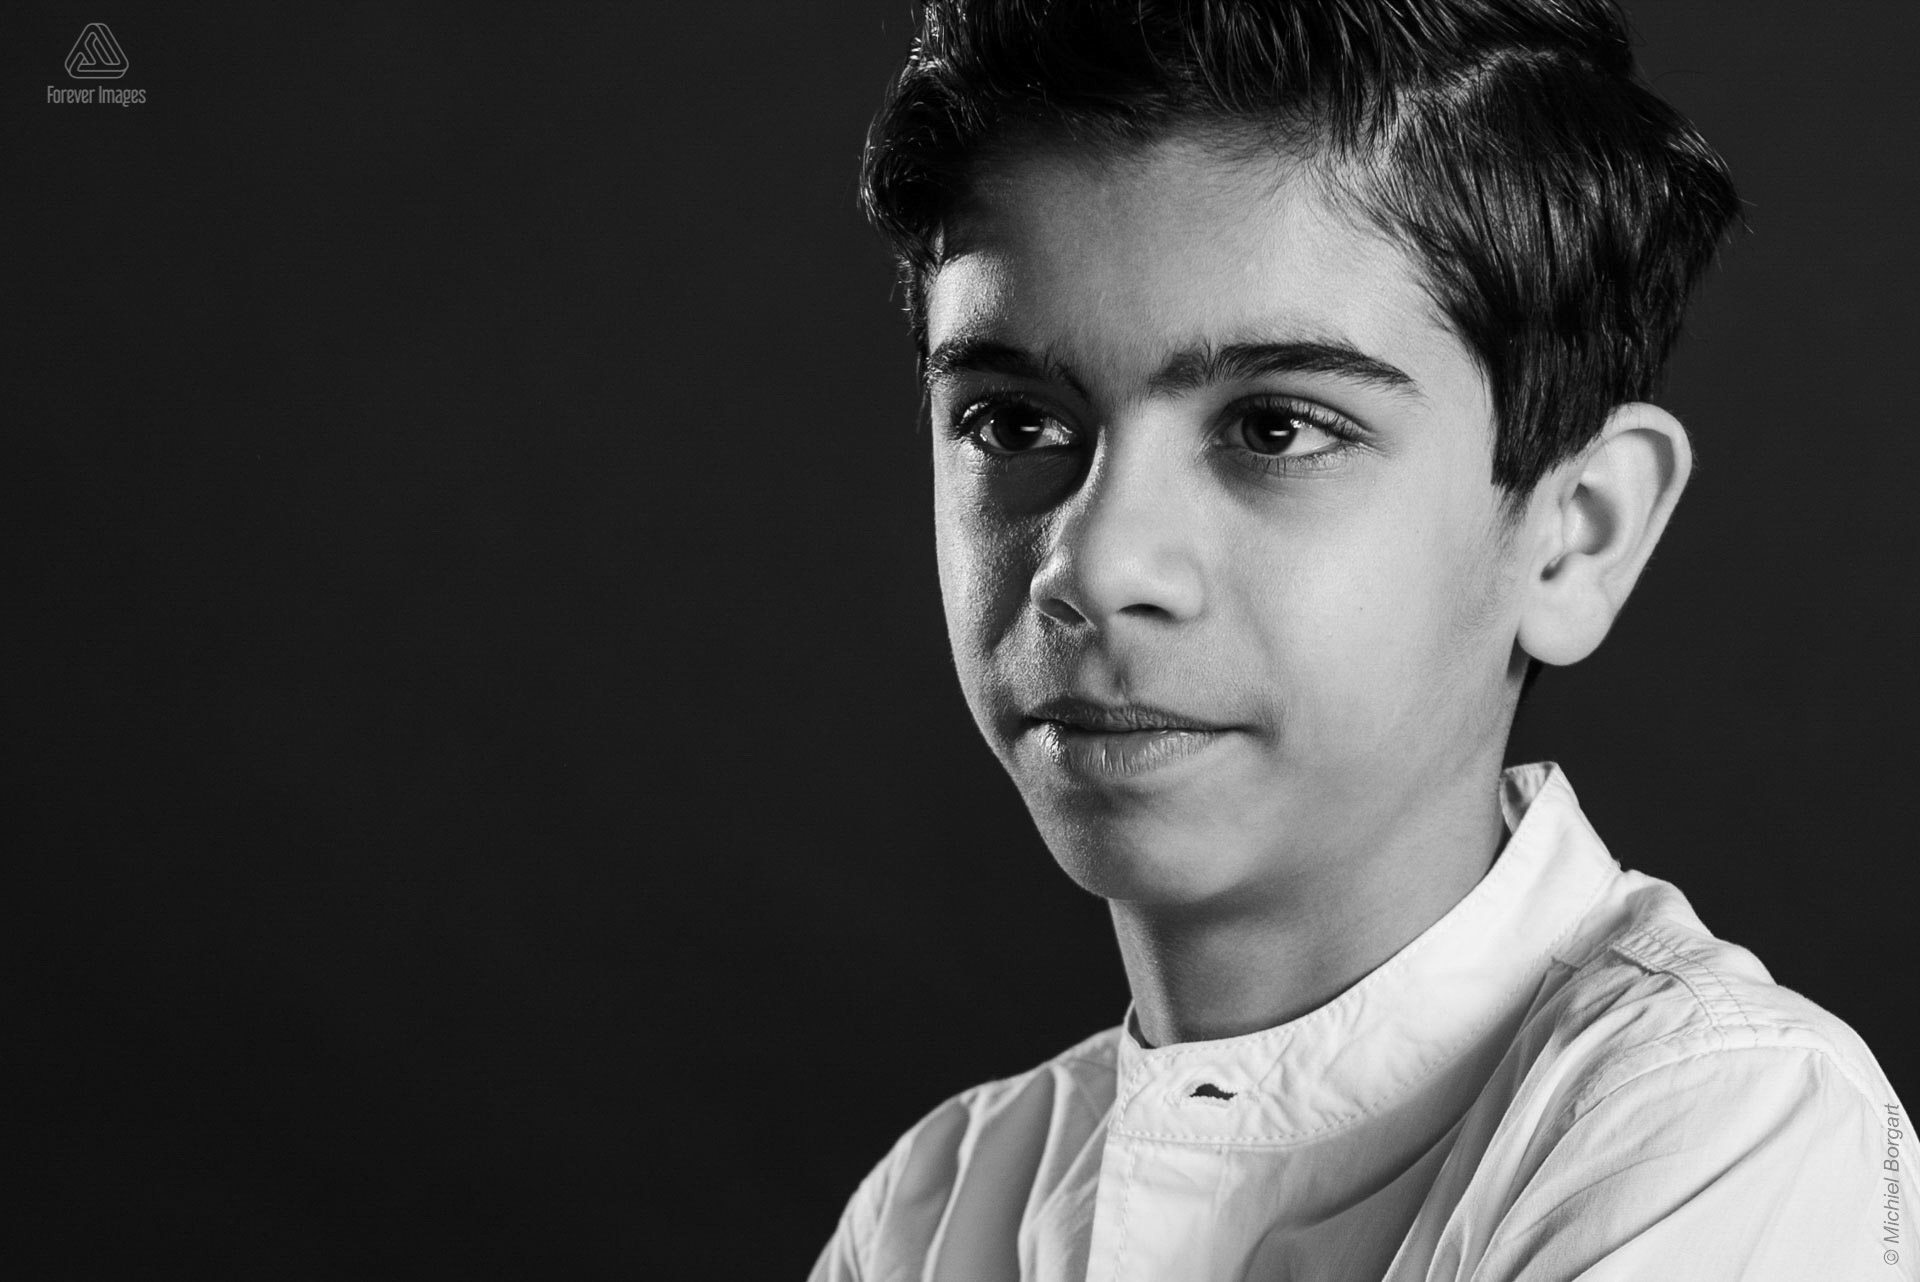 Portretfoto kinderfoto zwart-wit jonge vredige blik | Noam Grishaver | Portretfotograaf Michiel Borgart - Forever Images.